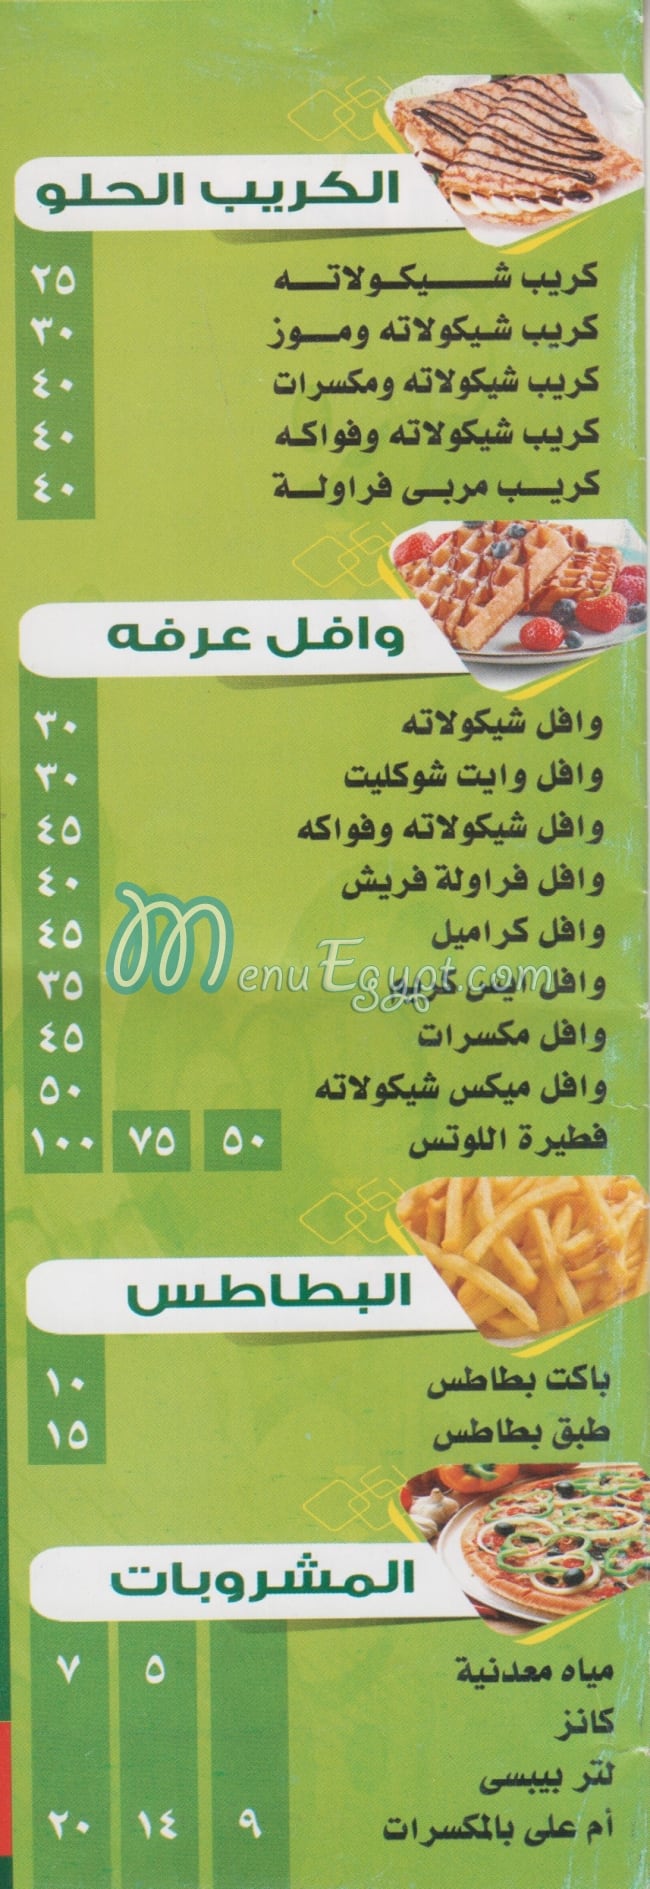 Arafa menu Egypt